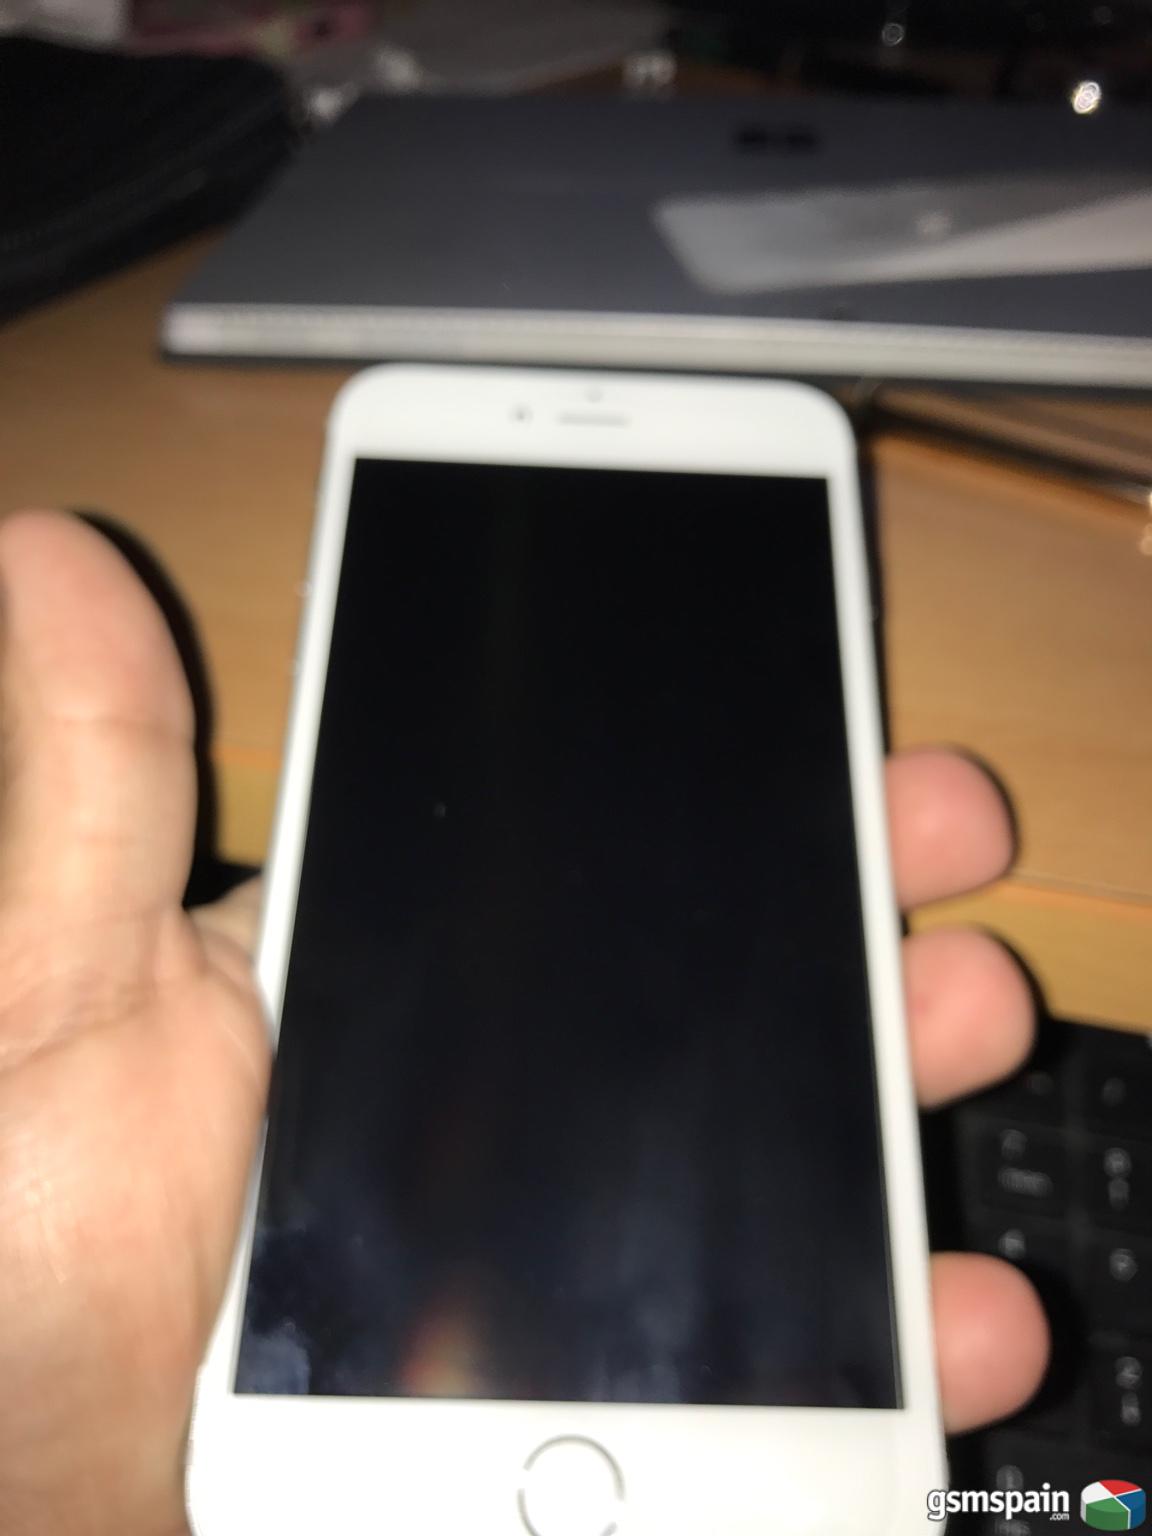 [VENDO] iphone 6 s plus impoluto 128g blanco como nuevo